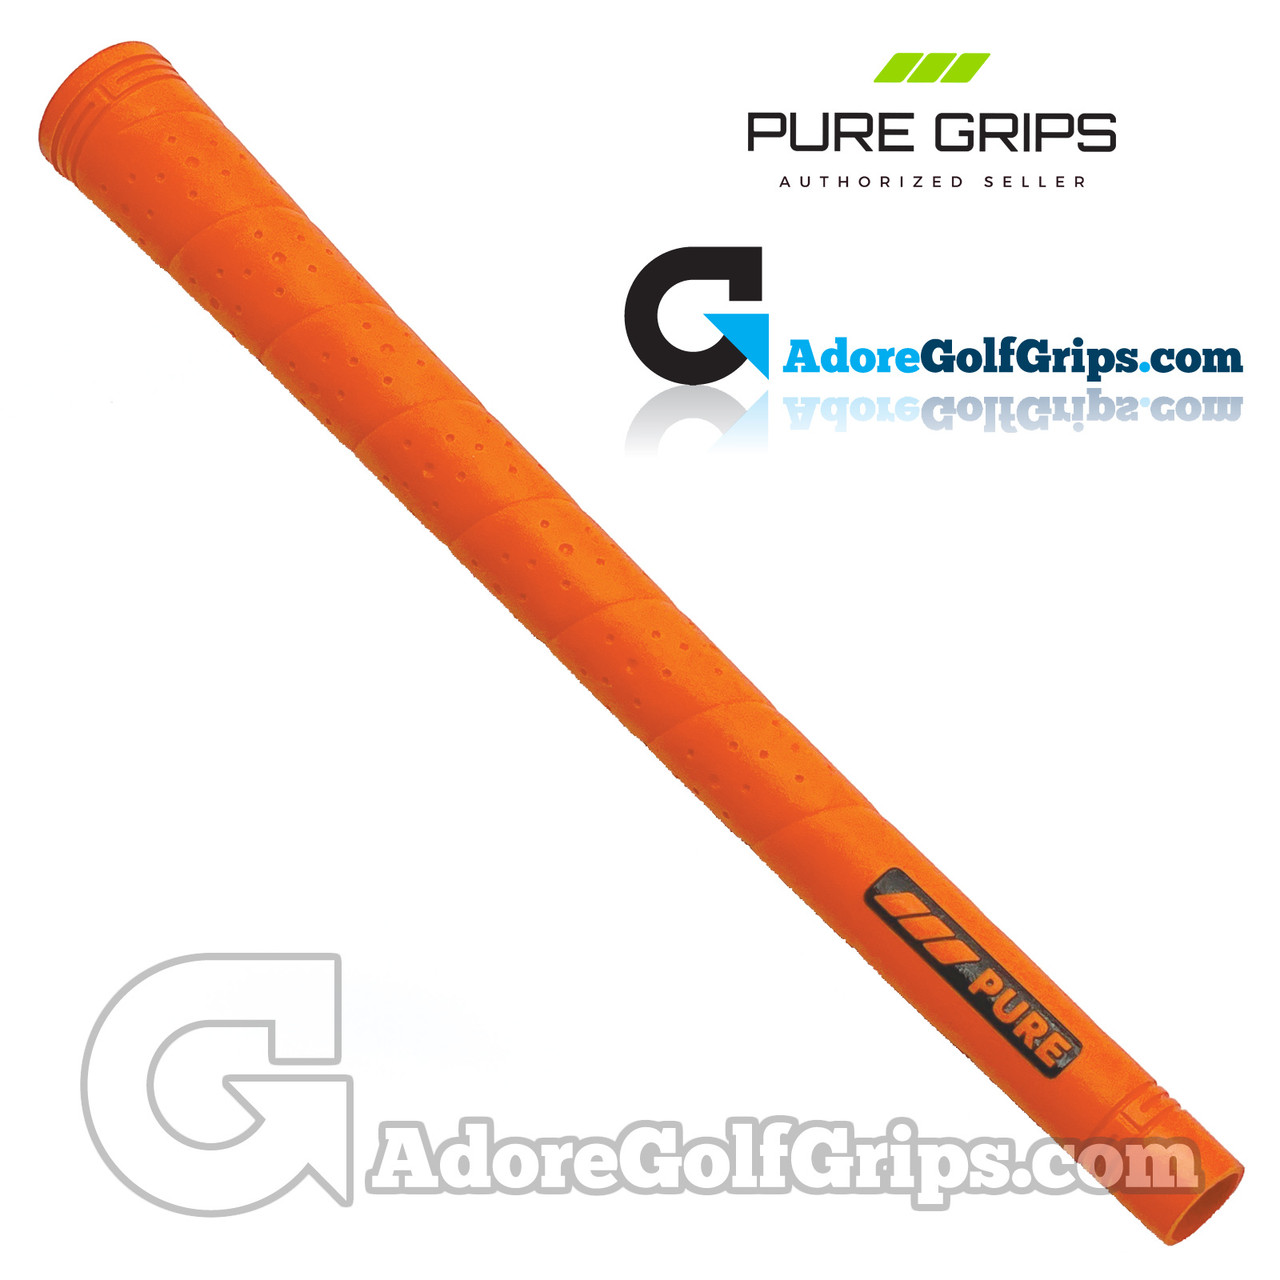 https://cdn11.bigcommerce.com/s-38716/images/stencil/1280x1280/products/2555/8481/pure-grips-p2-wrap-standard-grips-neon-orange__12308.1636105464.jpg?c=2